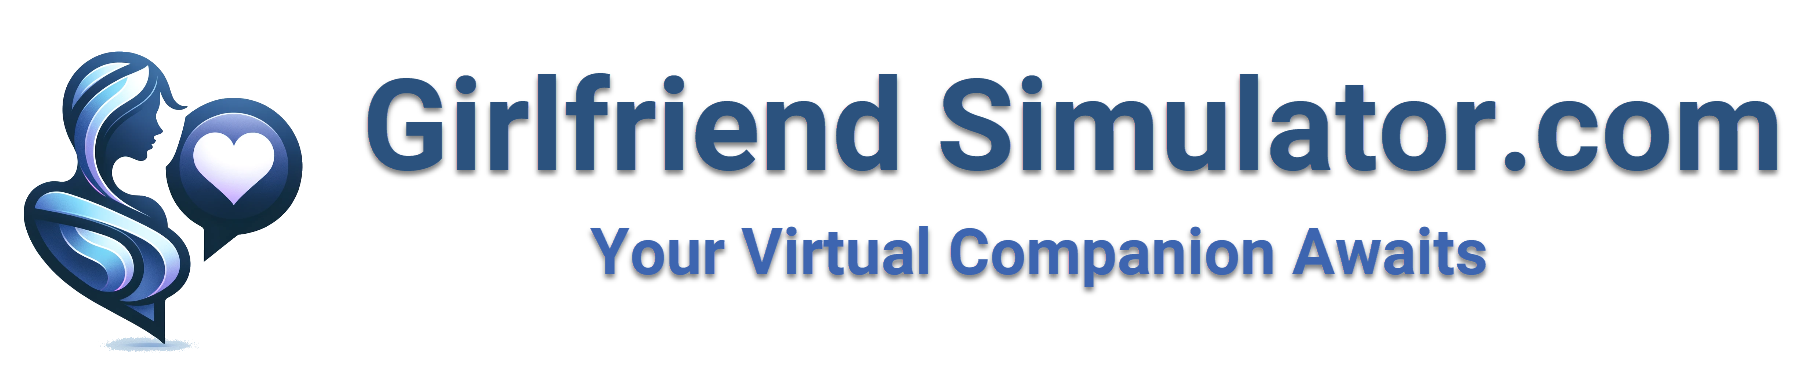 girlfriend simulator Logo